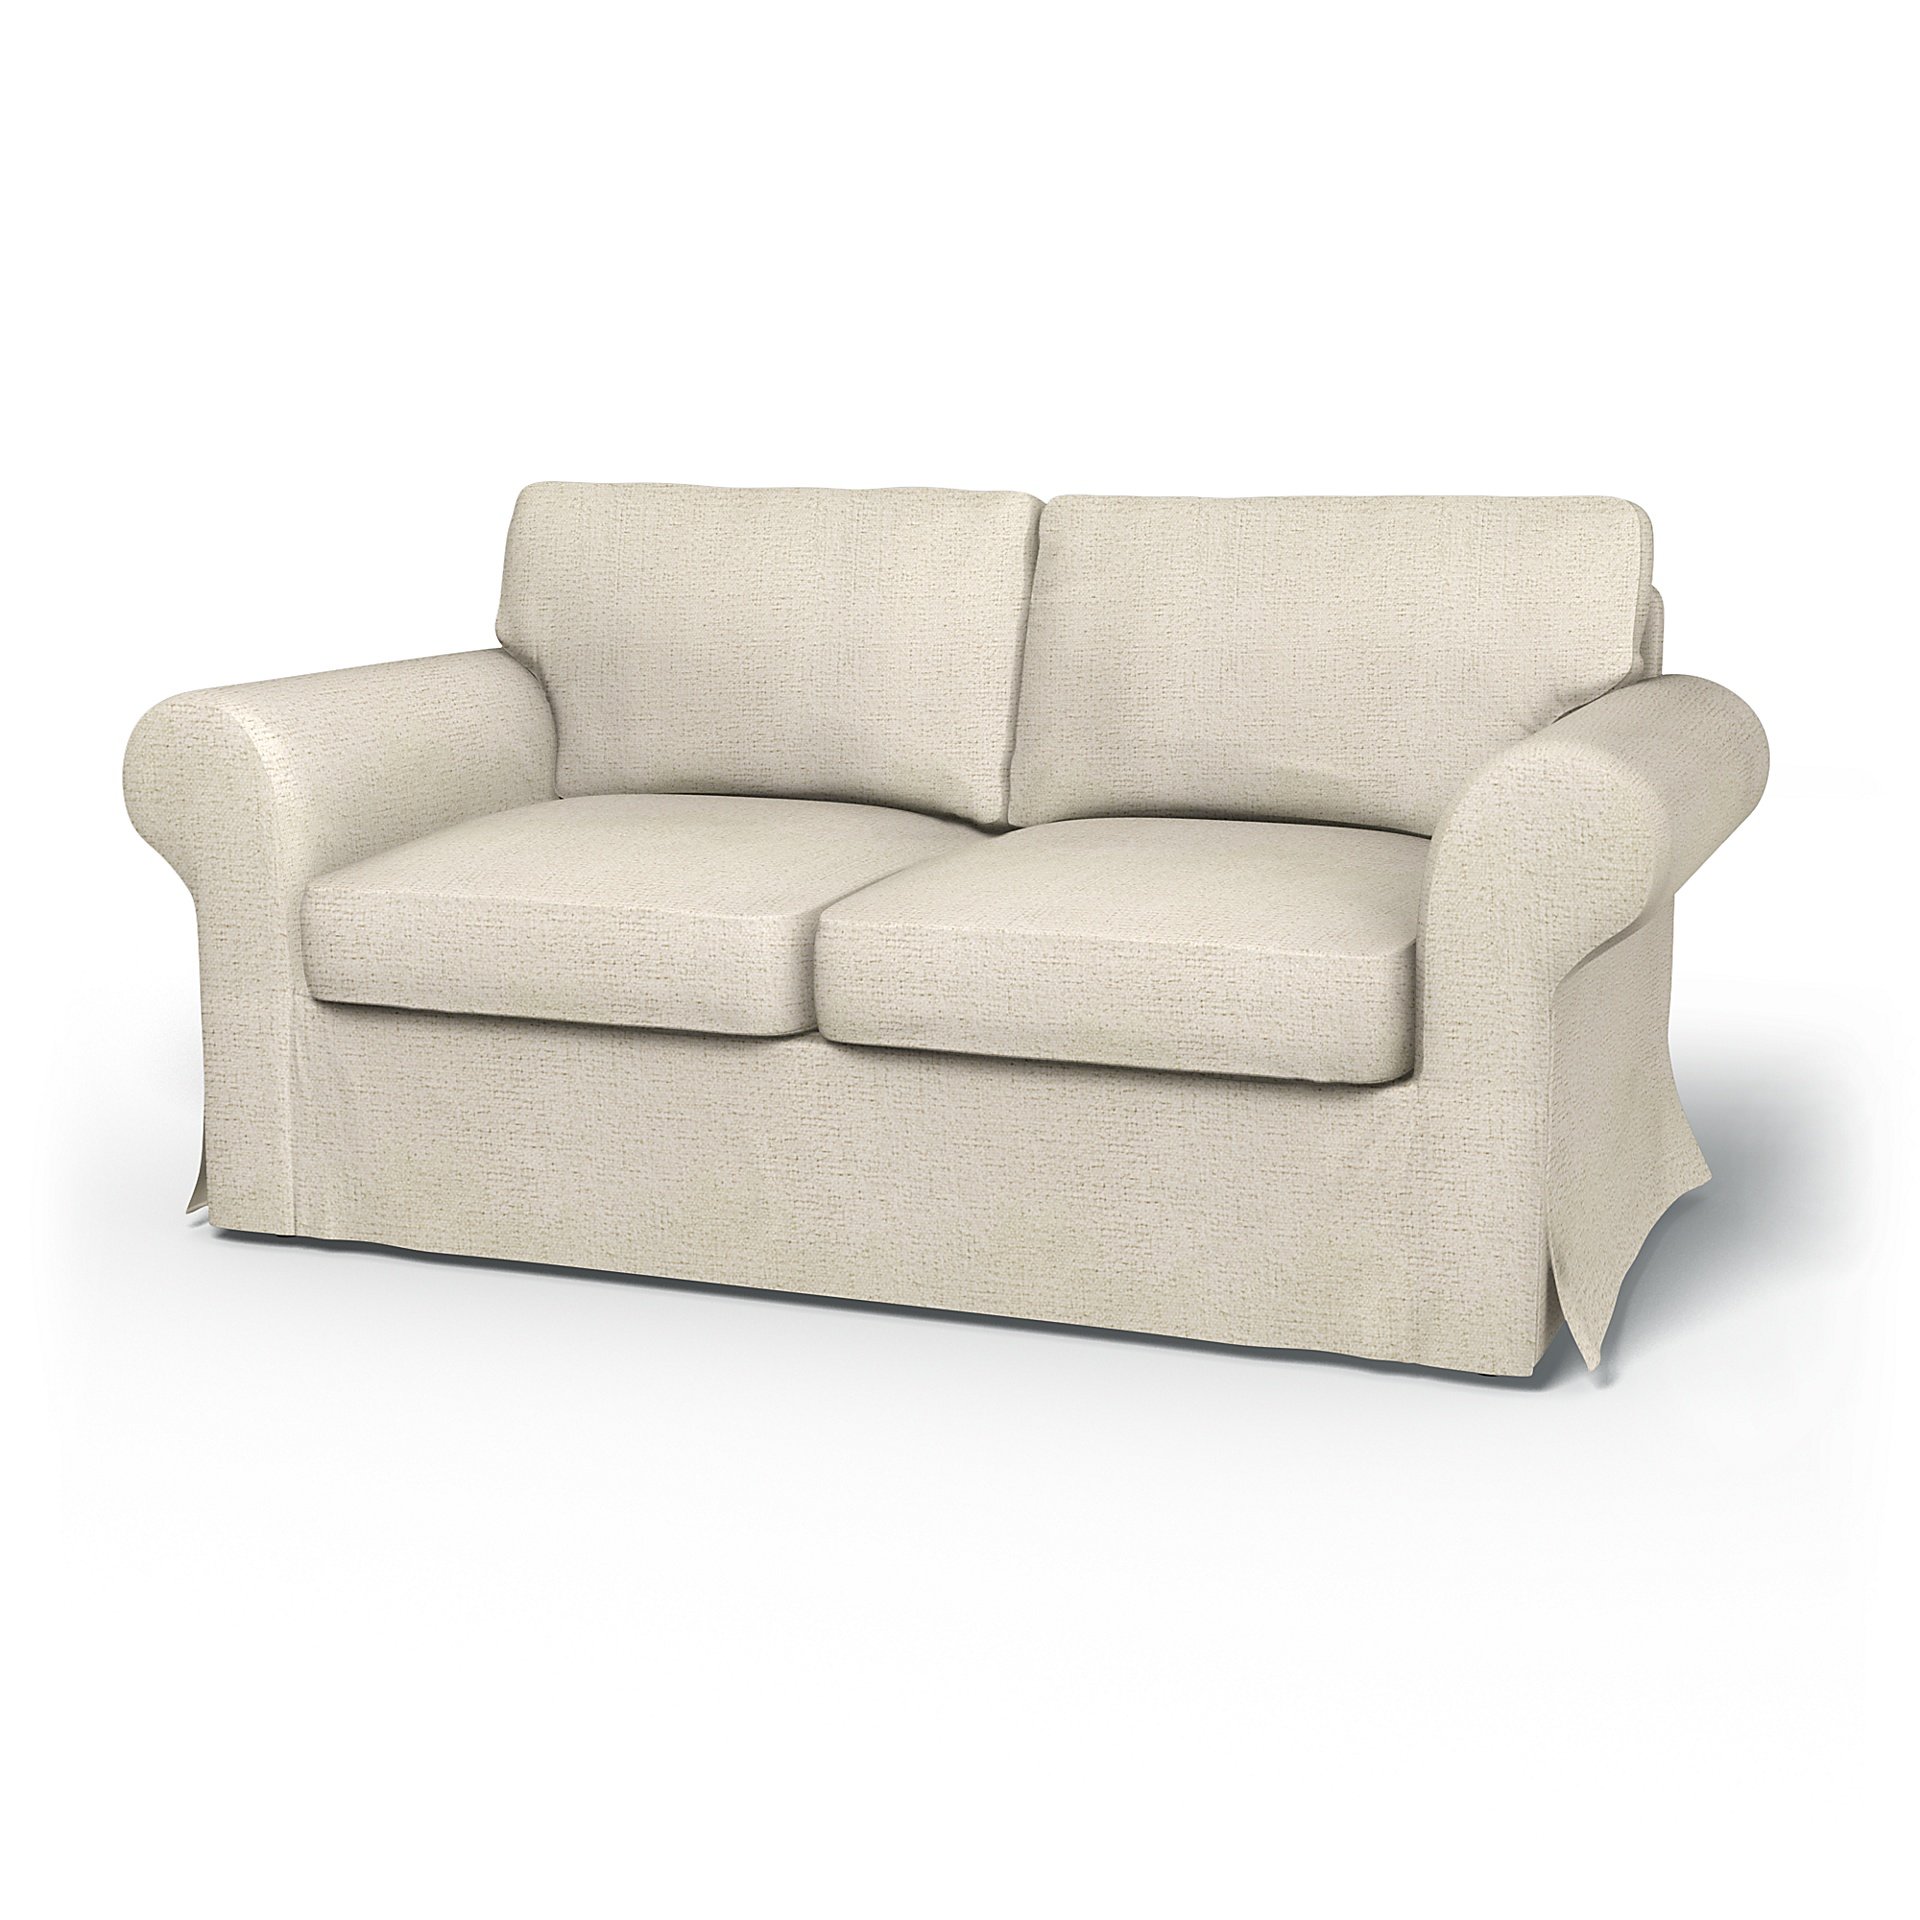 IKEA - Ektorp 2 Seater Sofa Bed Cover, Ecru, Boucle & Texture - Bemz